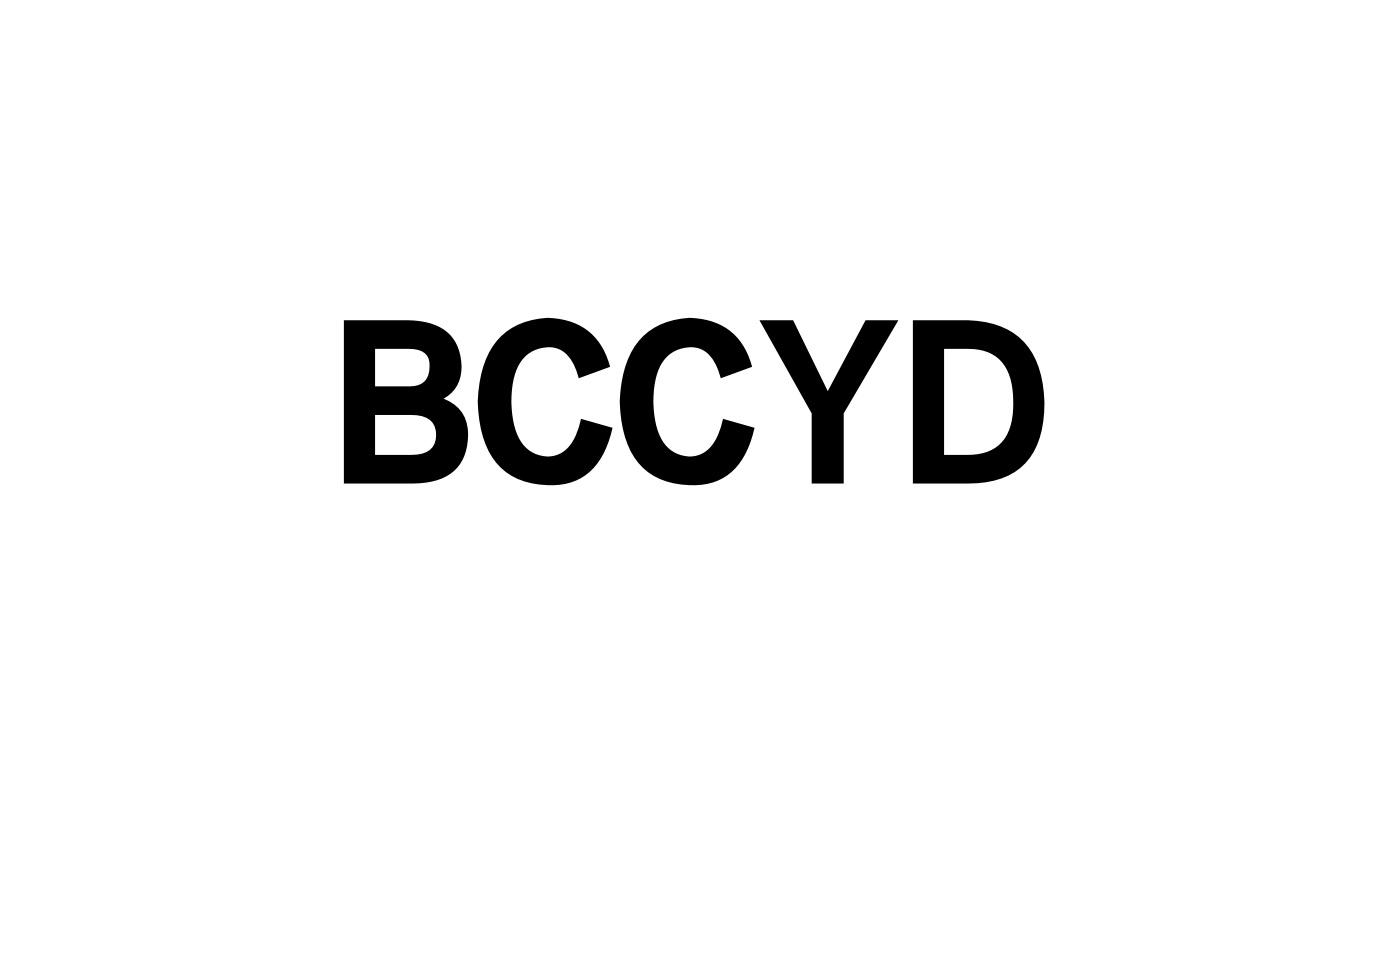 BCCYD